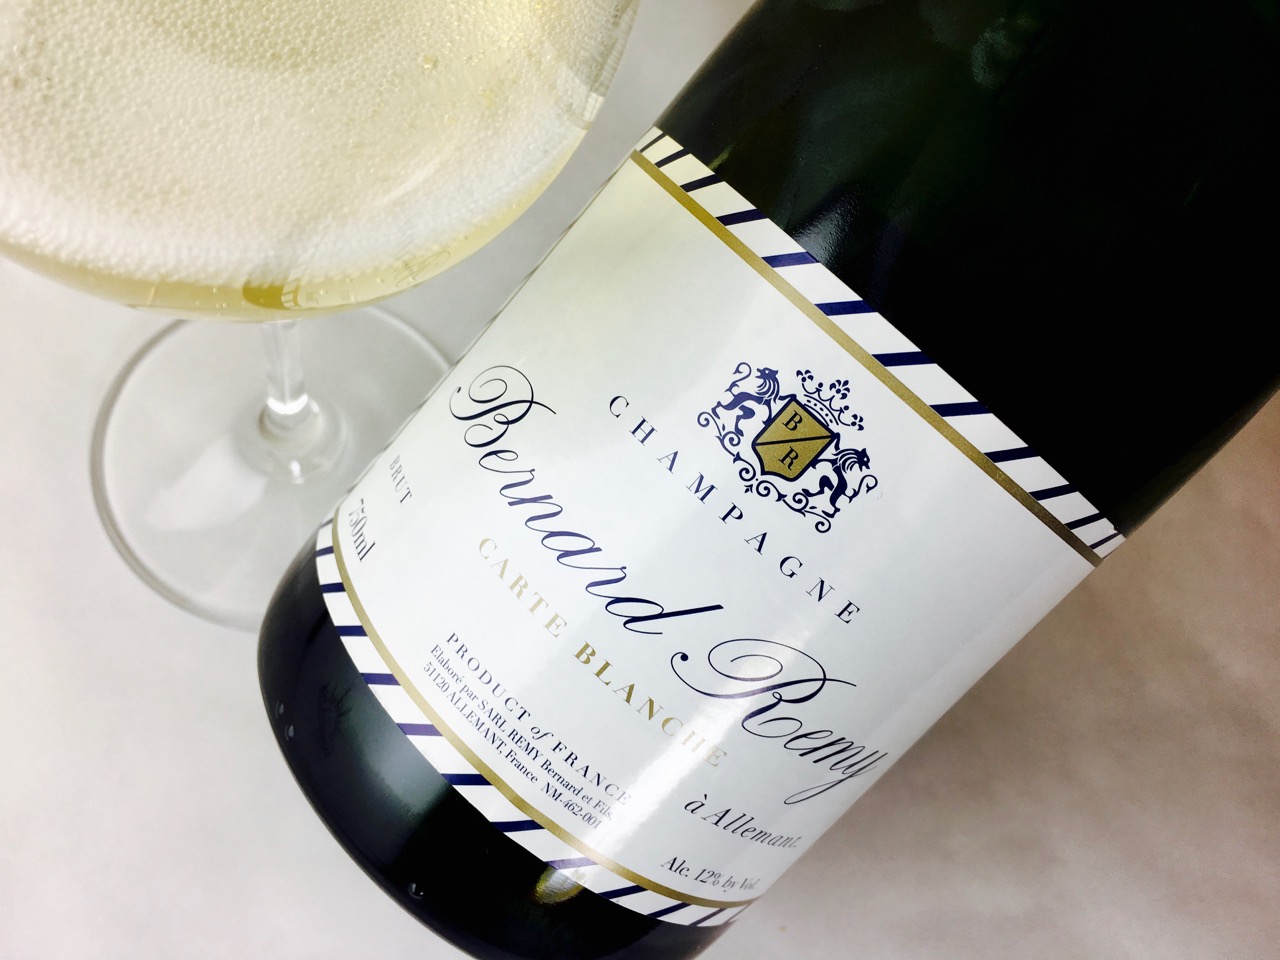 NV Bernard Remy Carte Blanche Brut Champagne